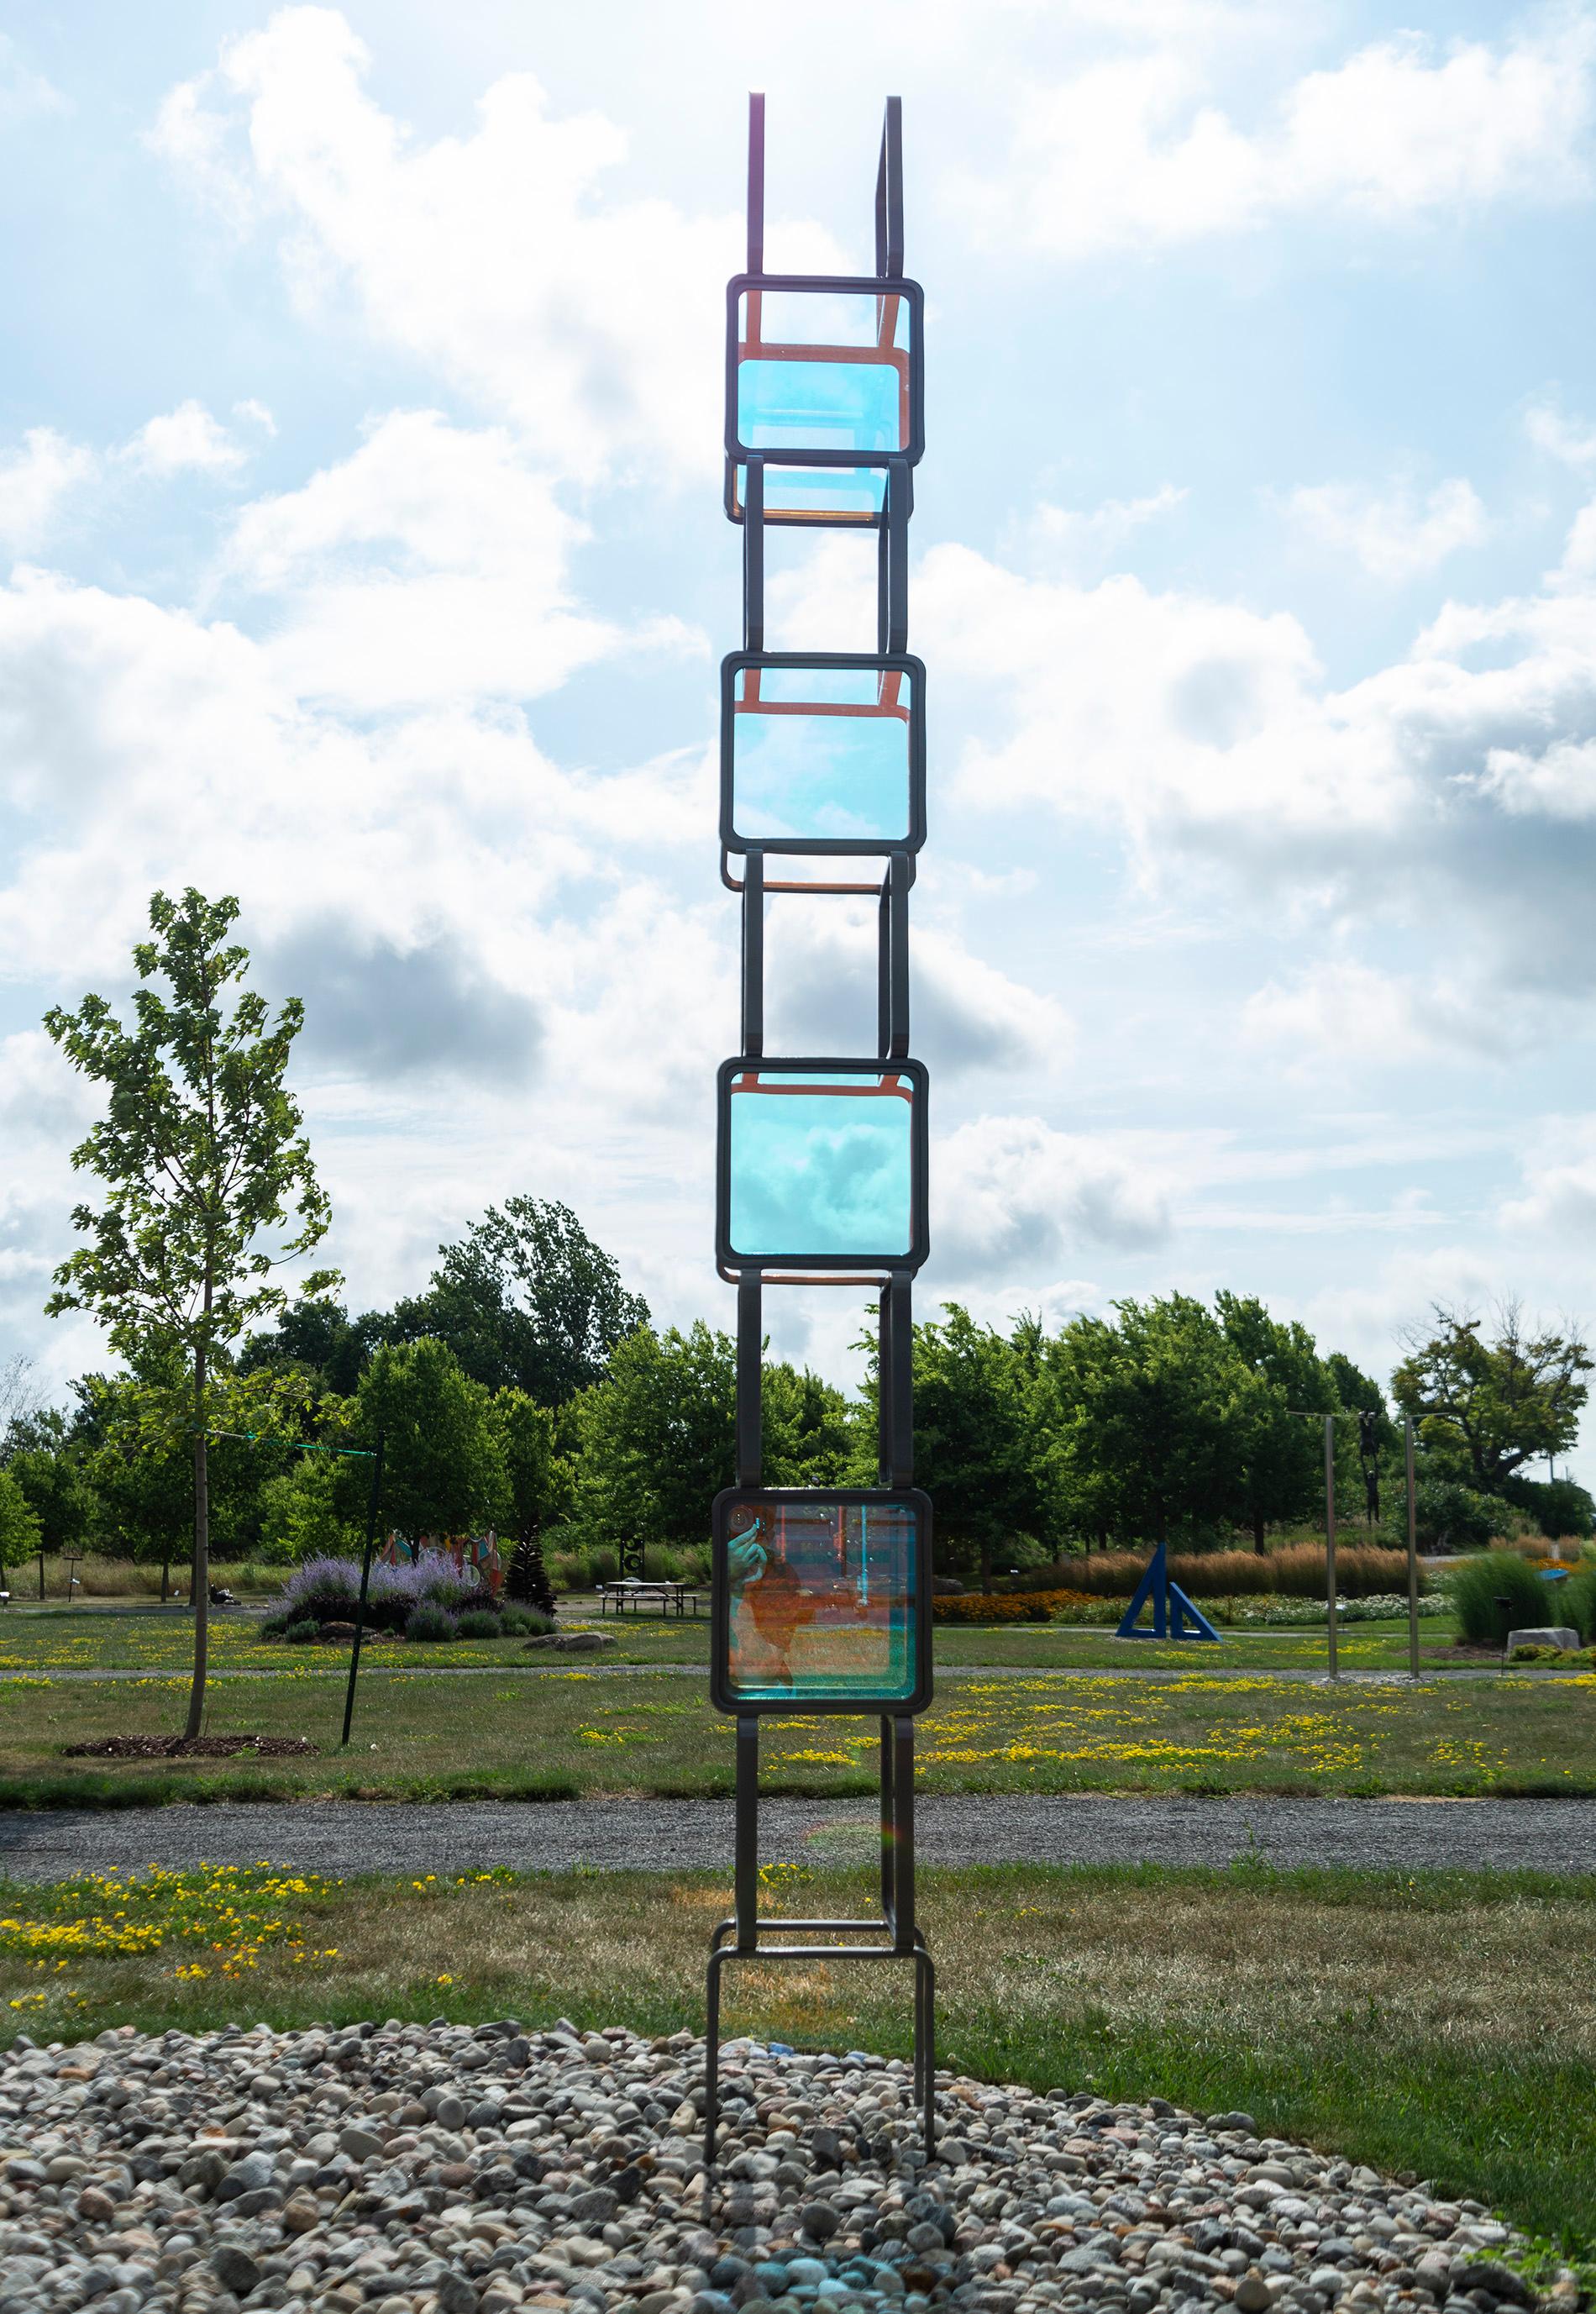 Chroma Tower No 1 - tall, geometric abstract, steel and glass sculpture - Abstract Geometric Sculpture by Ryan Van Der Hout